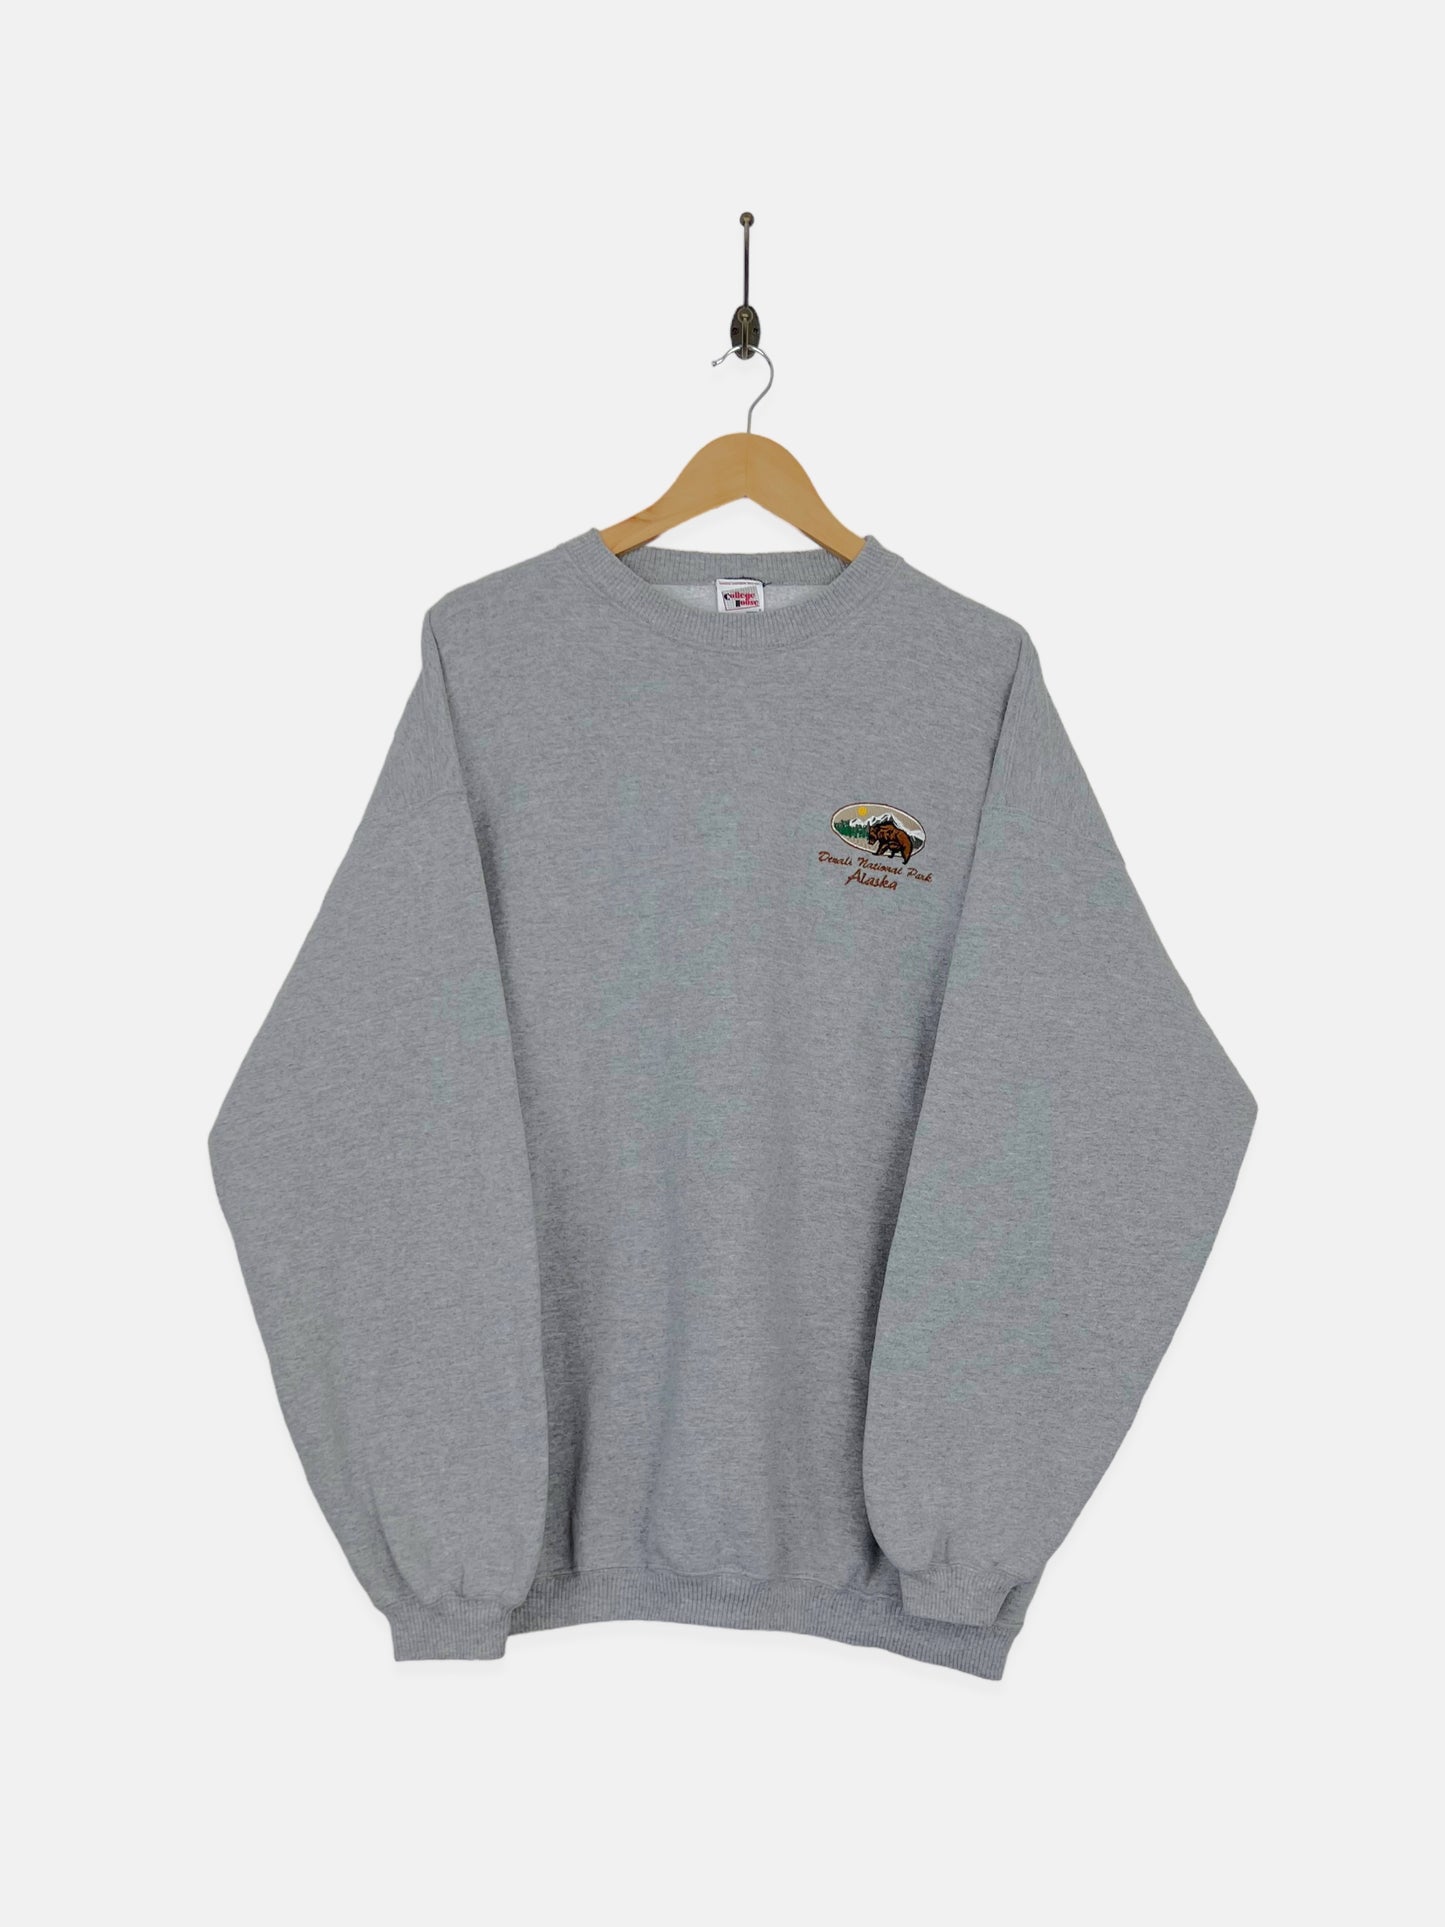 90's Denali National Park Alaska USA Made Embroidered Vintage Sweatshirt Size XL-2XL